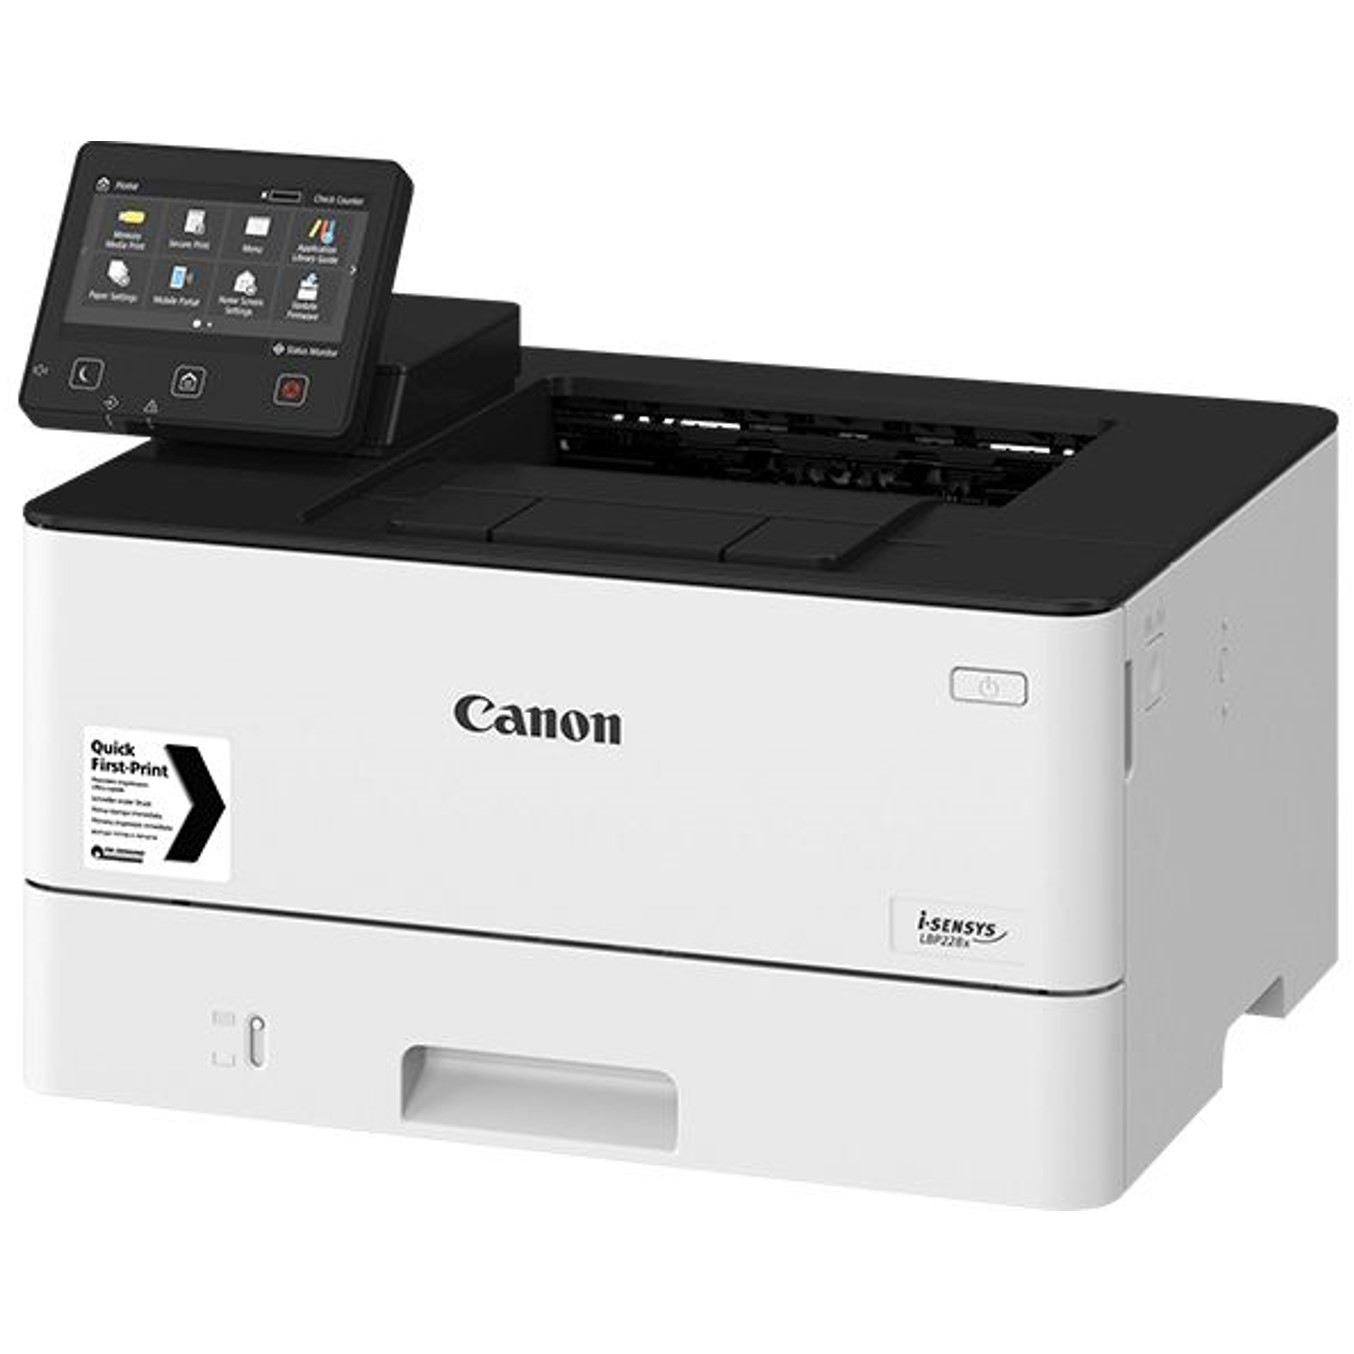 Impresora canon lbp228x laser monocromo i - sensys a4 -  38ppm -  1gb -  usb -  wifi -  wifi direct -  duplex -  bandeja 250 hojas